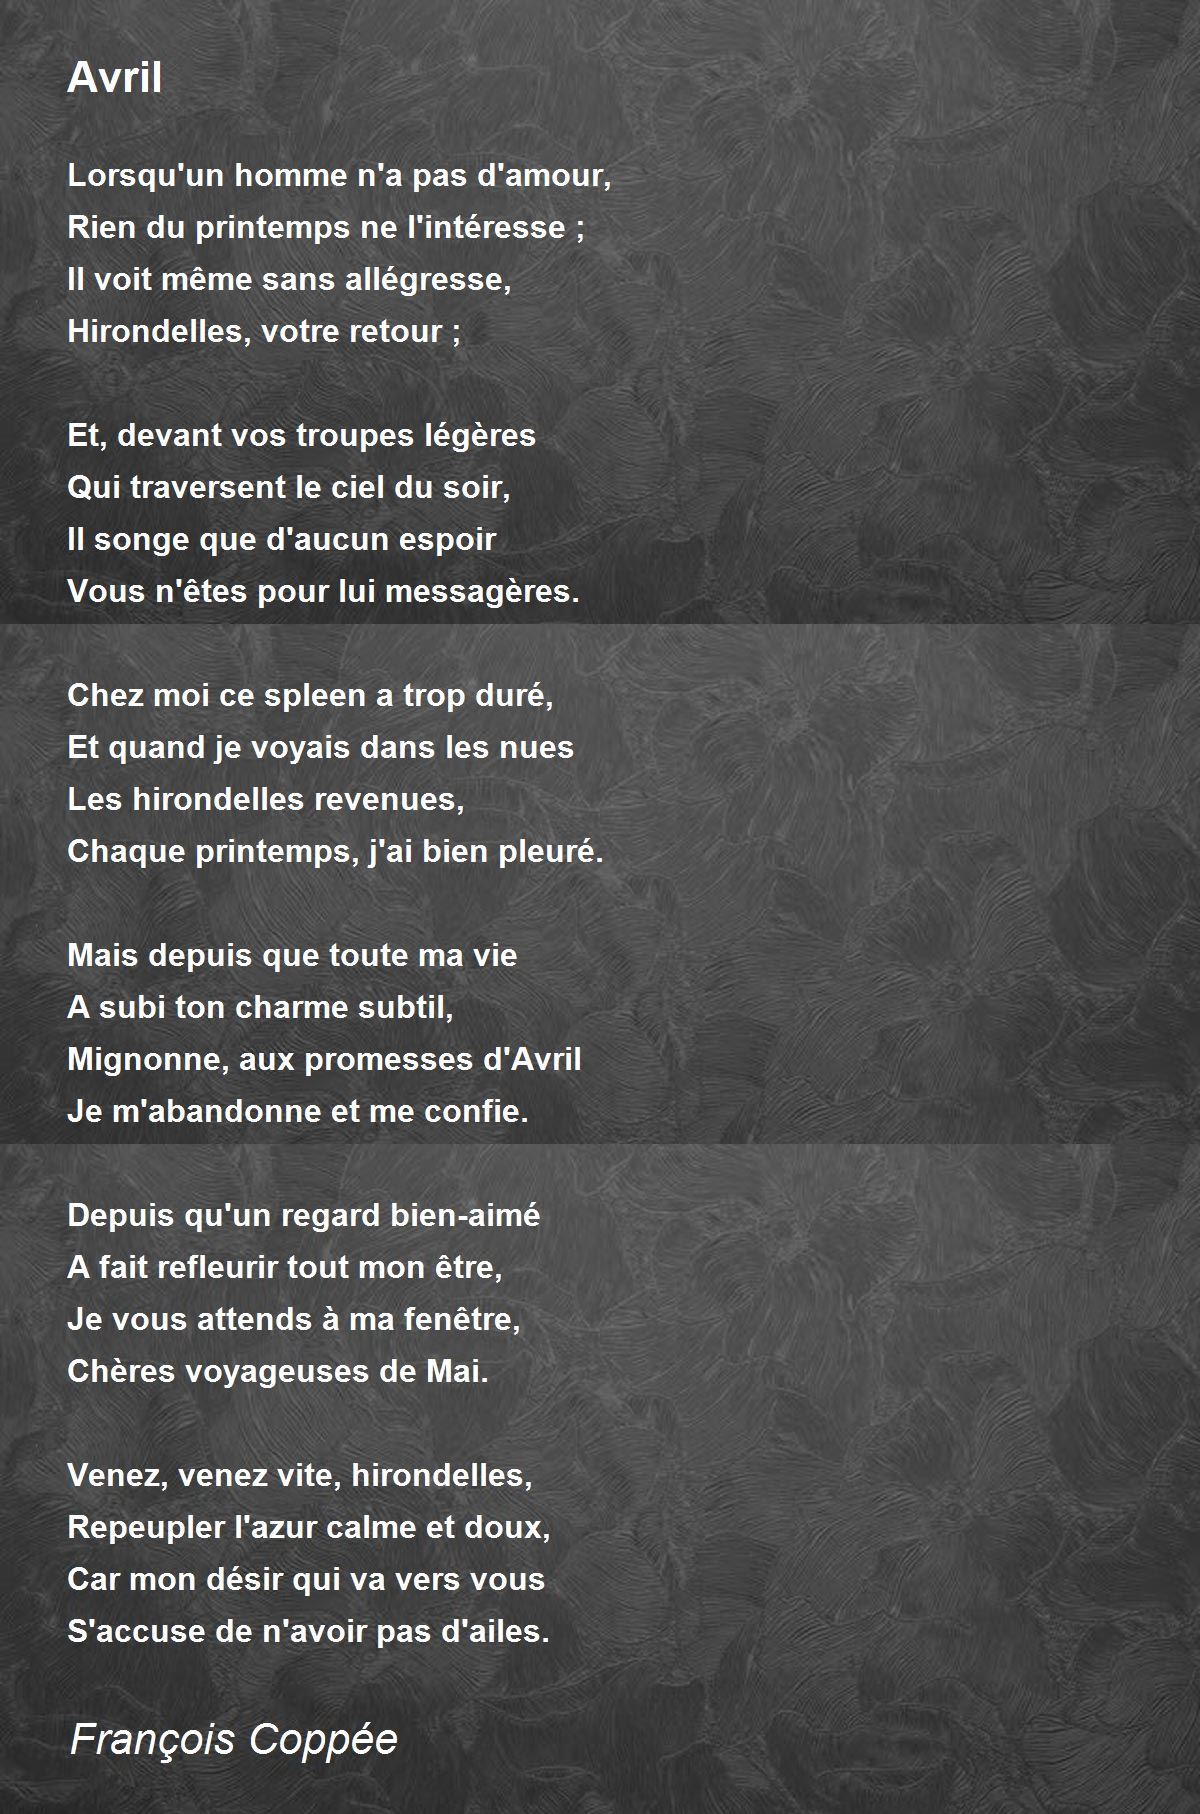 Avril - Avril Poem by François Coppée